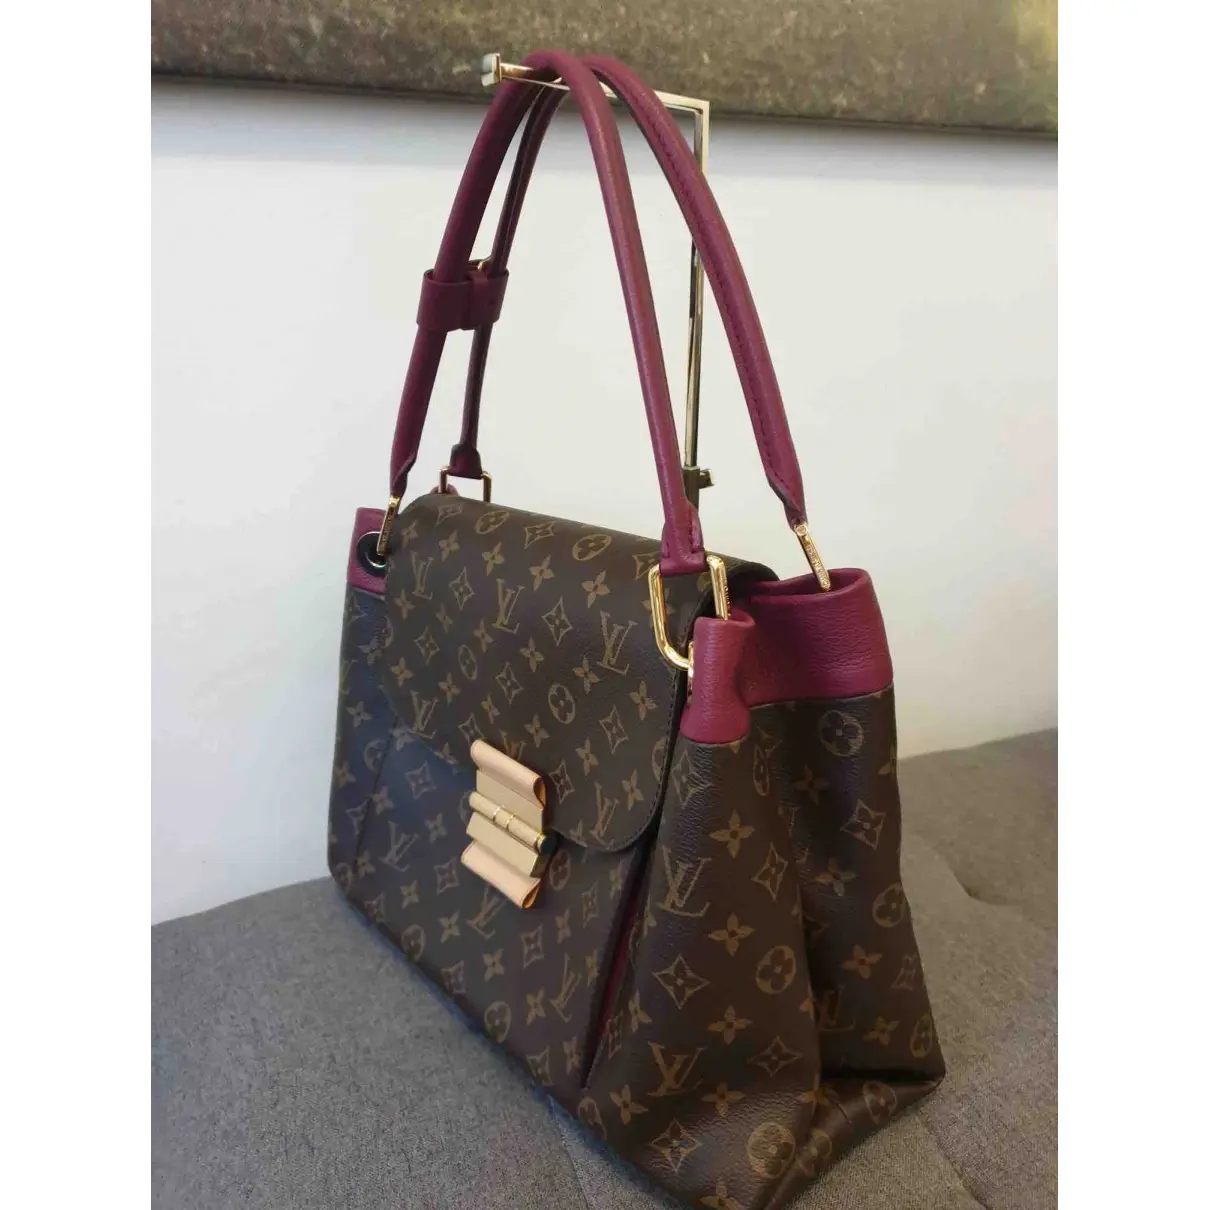 Buy Louis Vuitton Olympe cloth handbag online